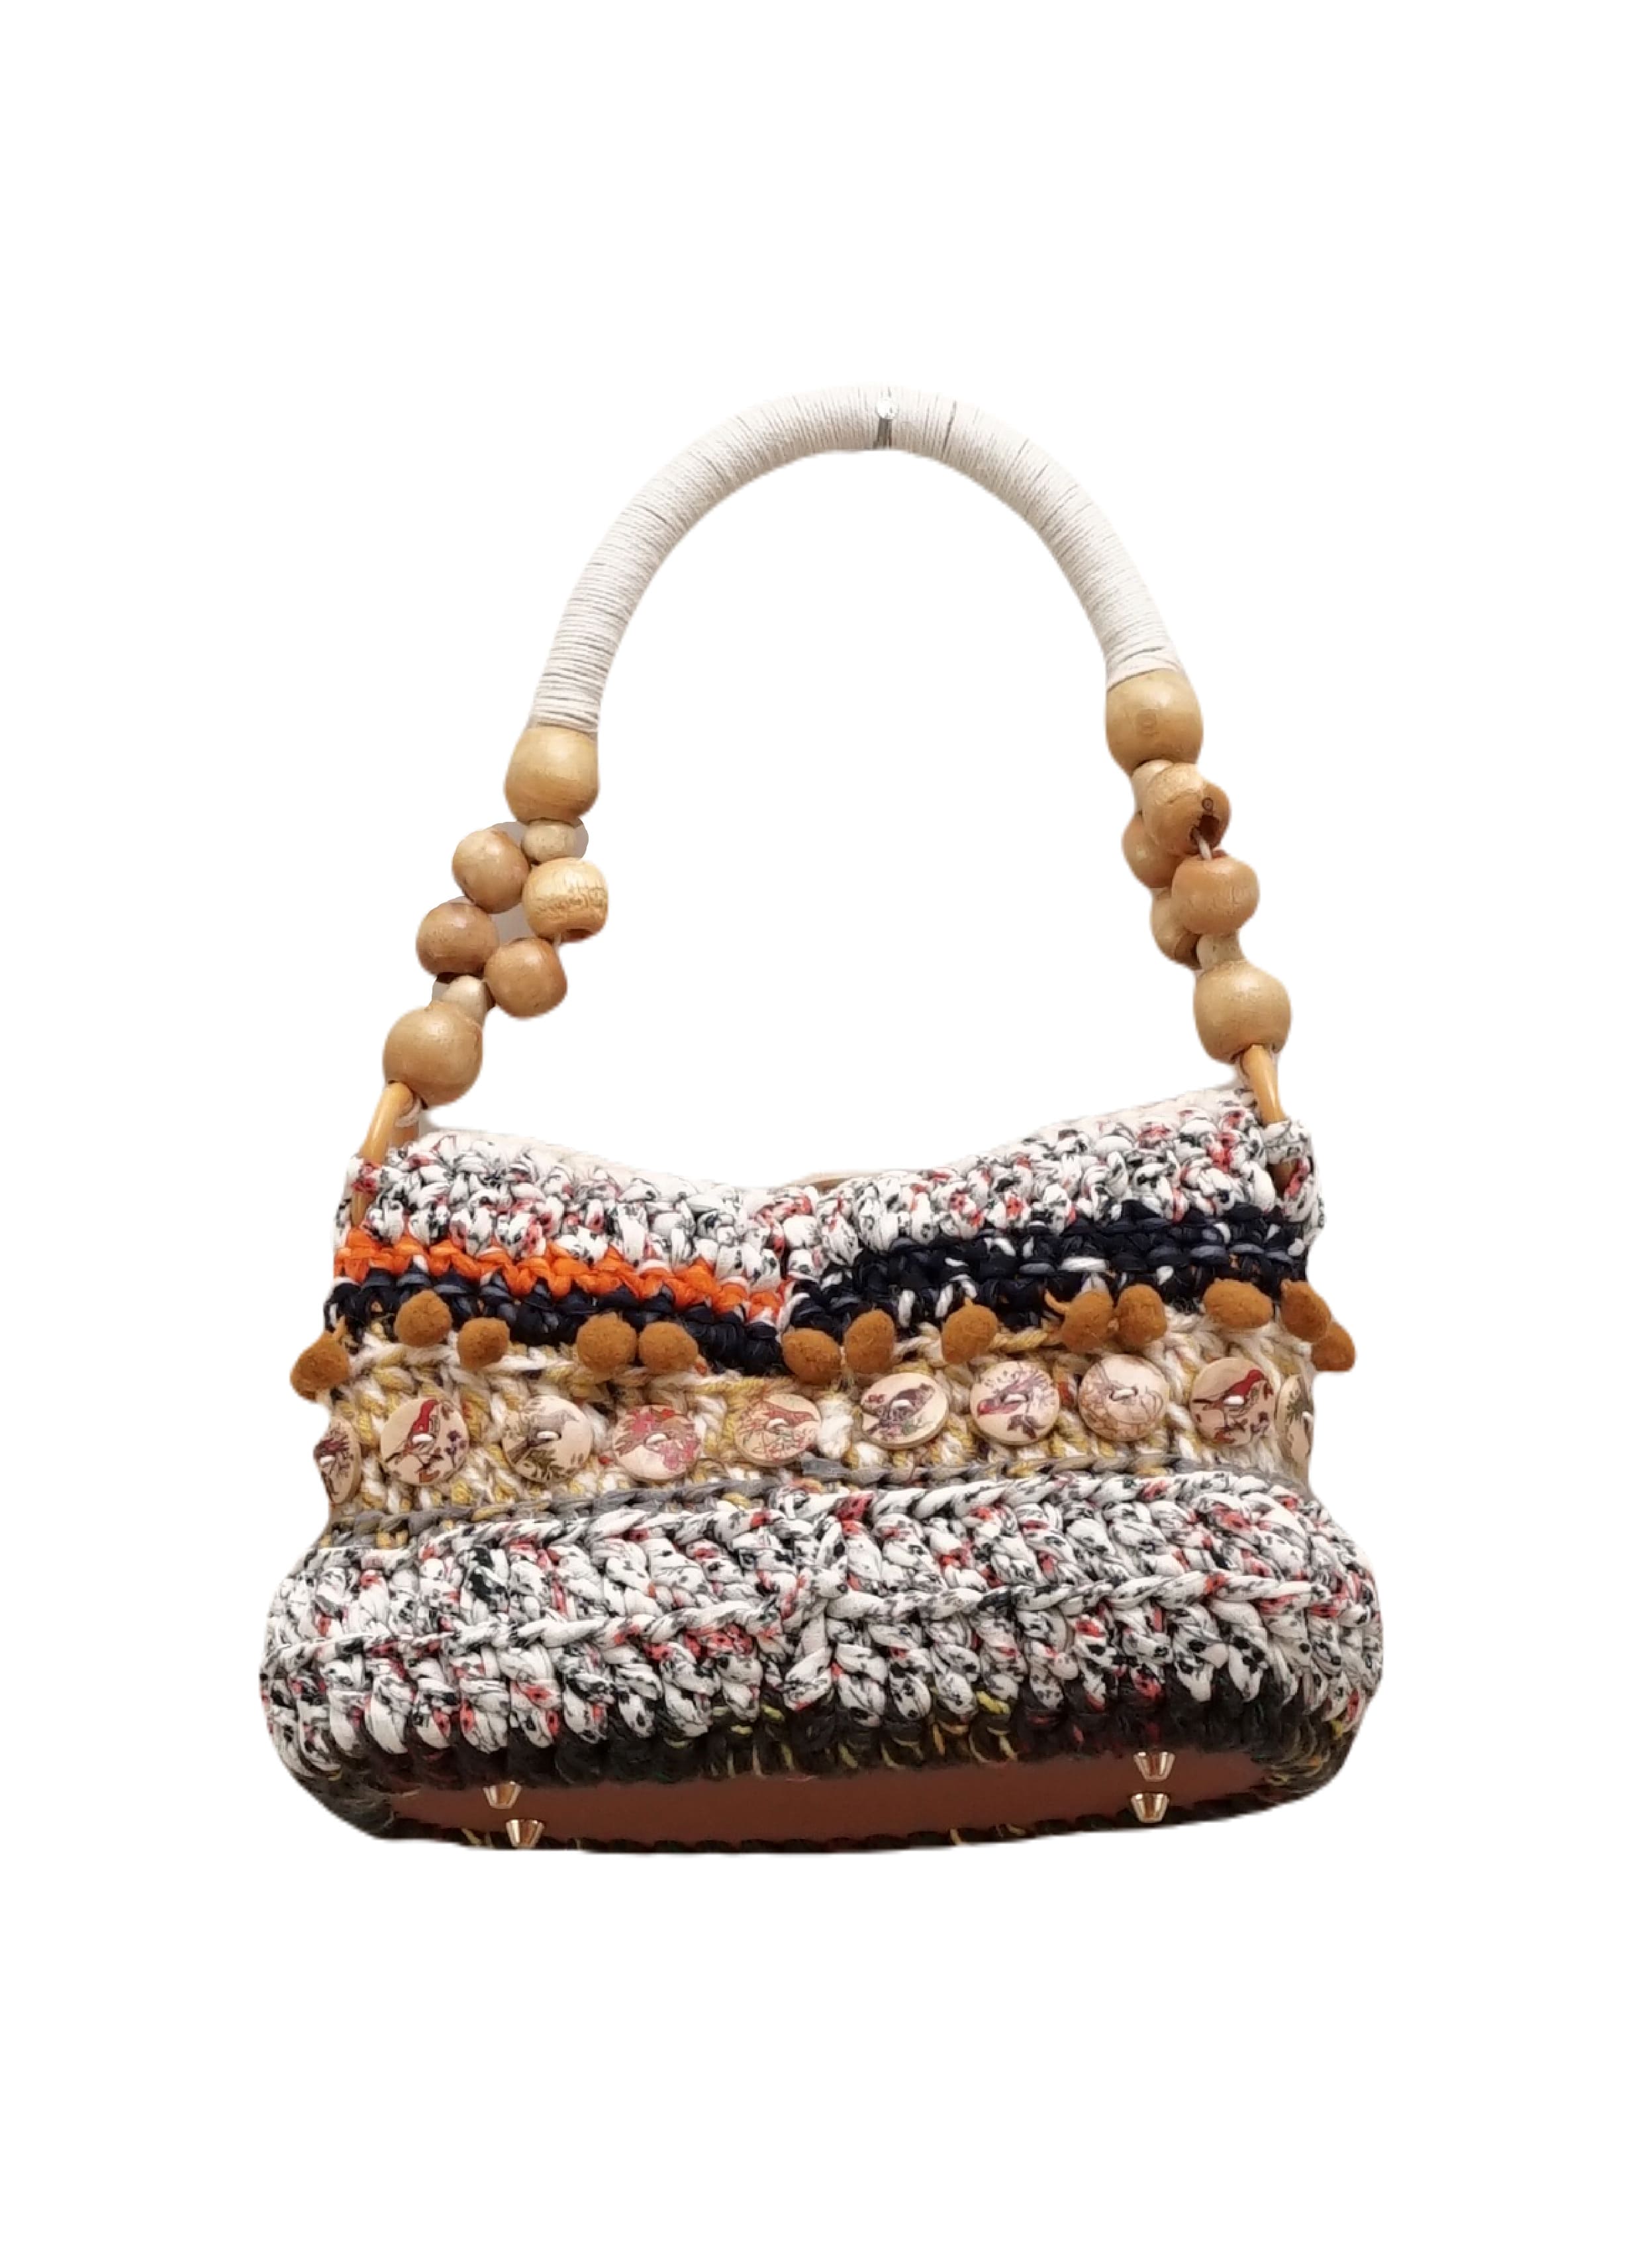 Crochet Hand Bag 02